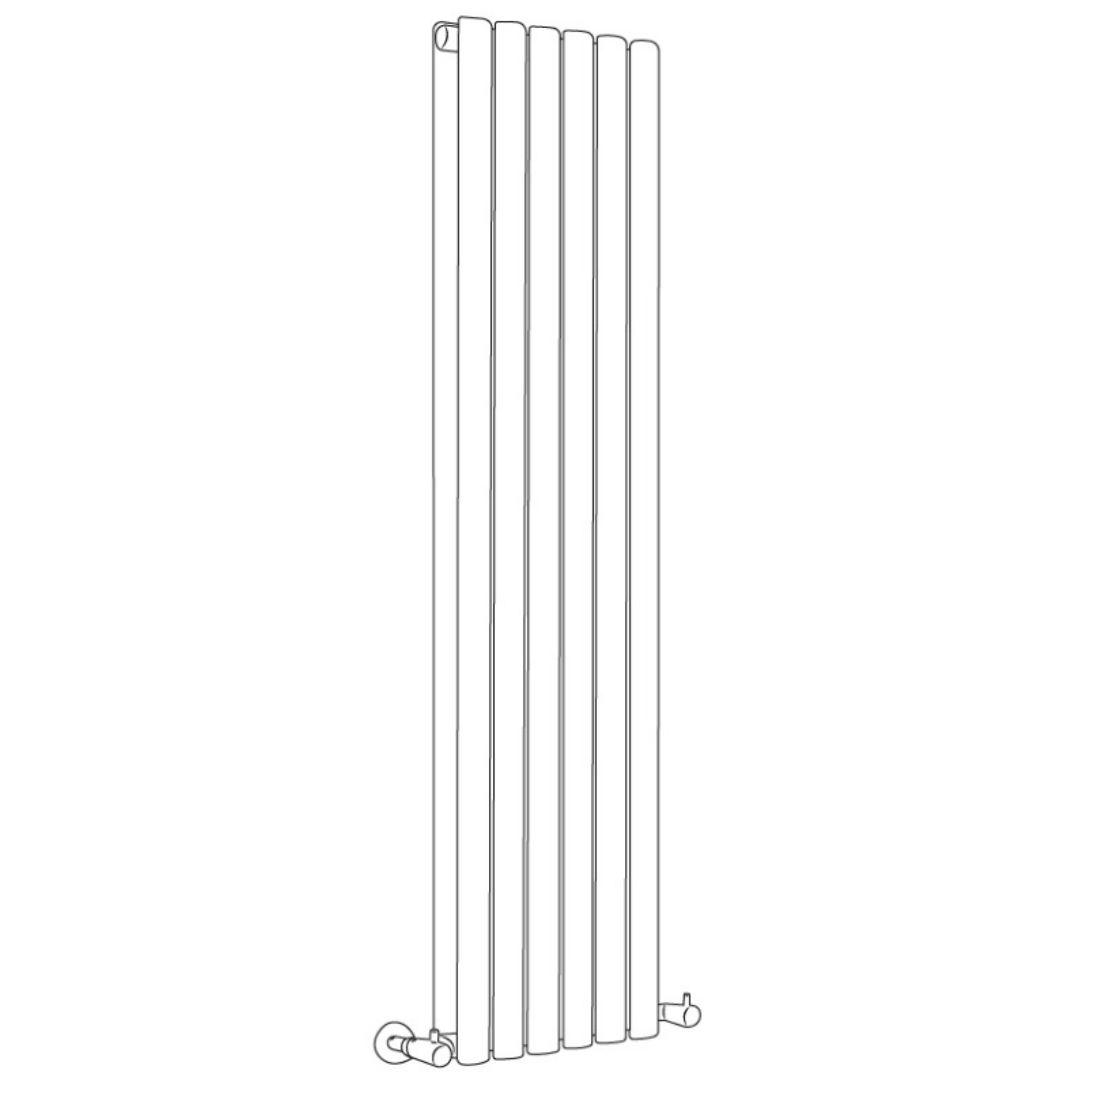 Line drawing of horizontal aruba radiator